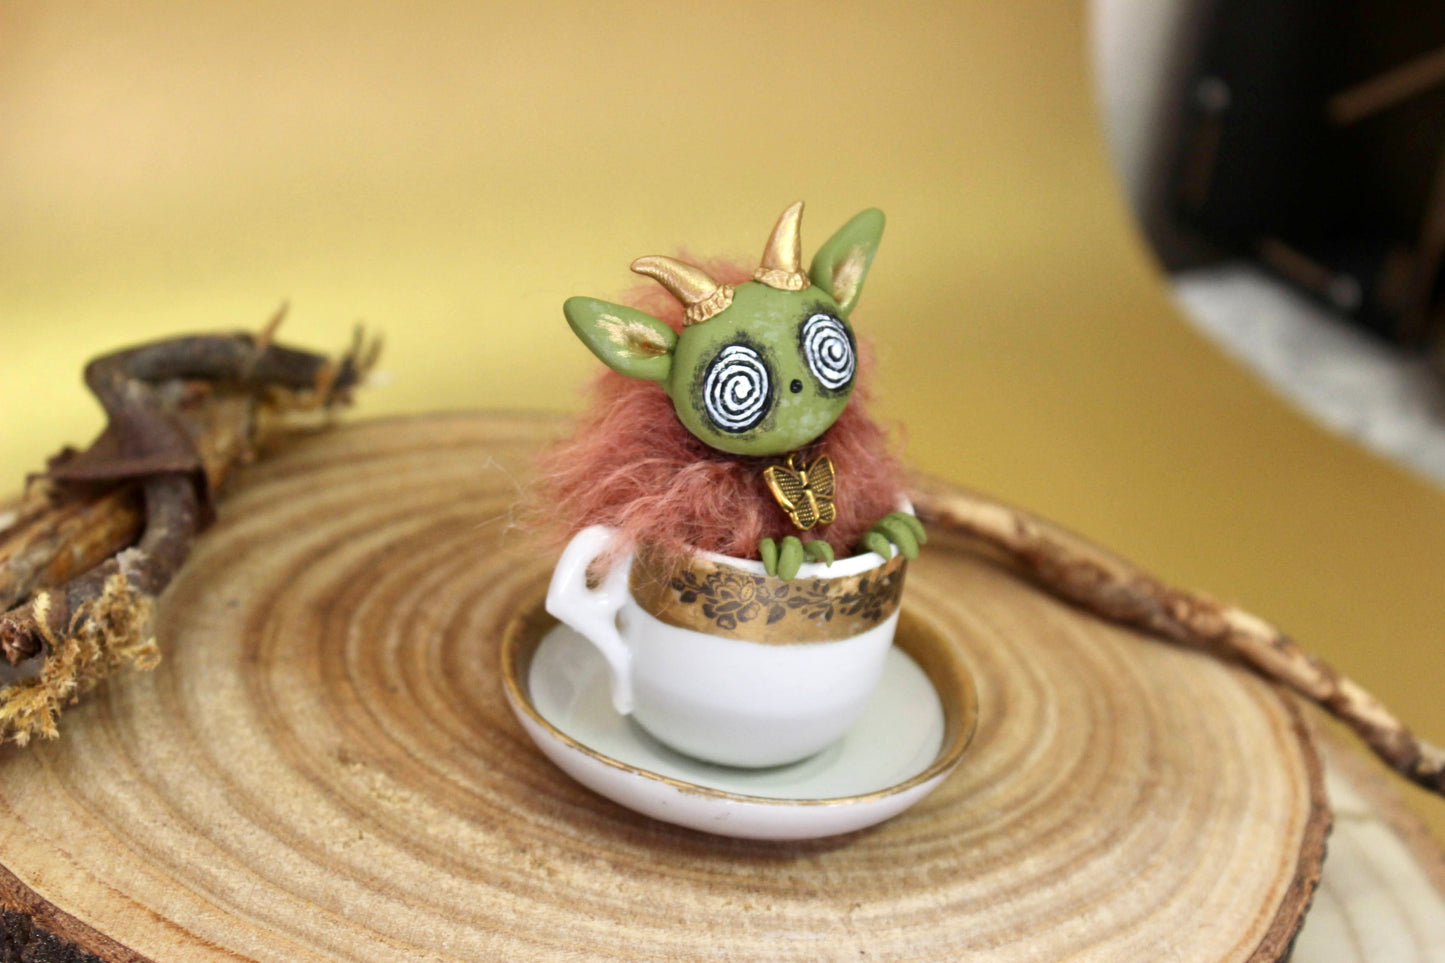 Minnie the Teacup Critter